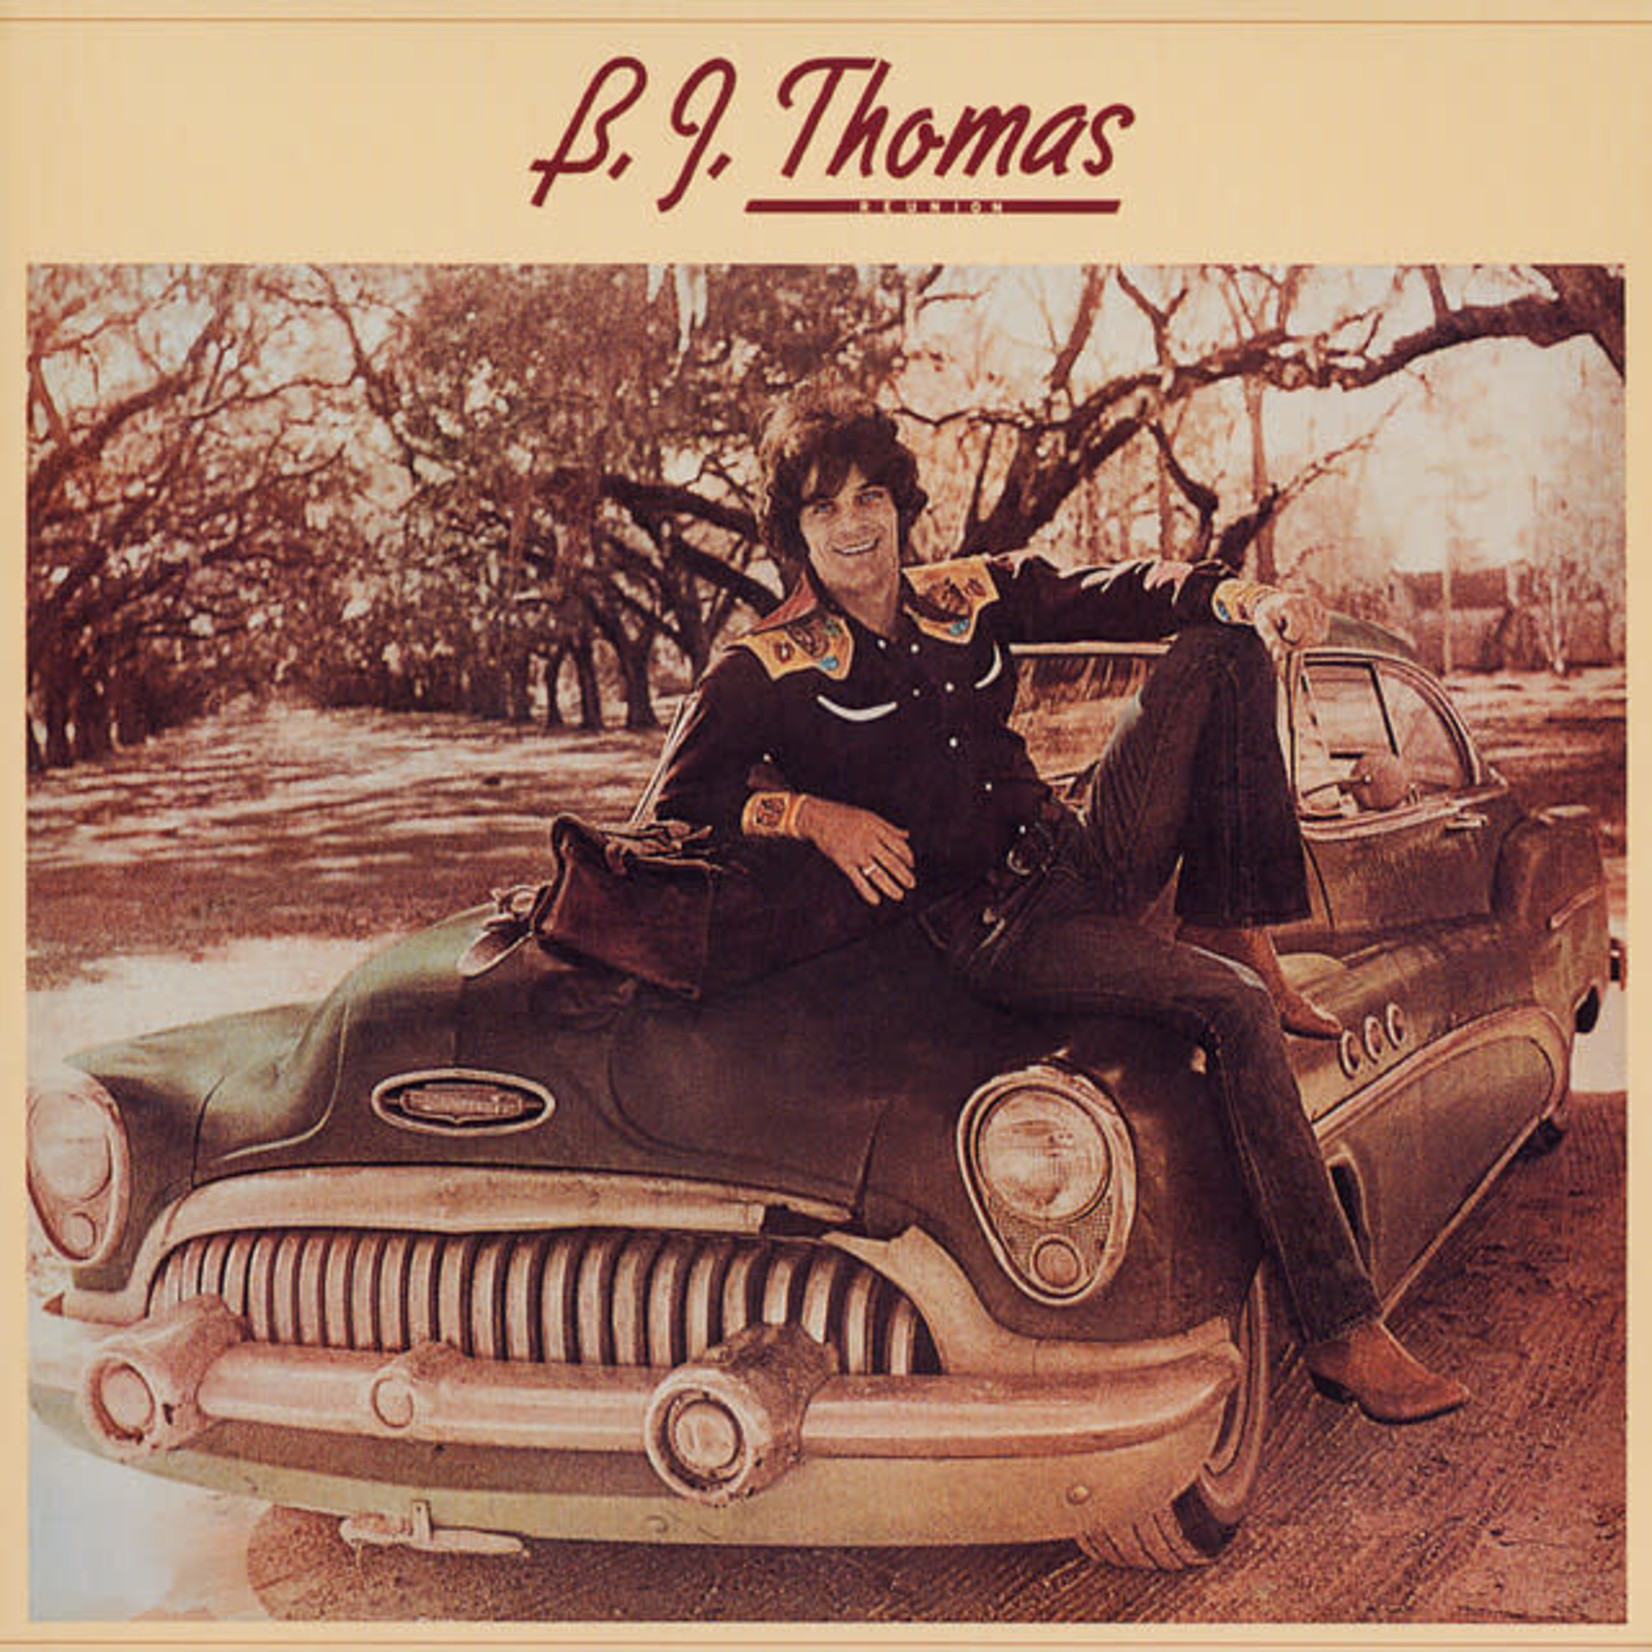 [Vintage] B.J. Thomas - Reunion